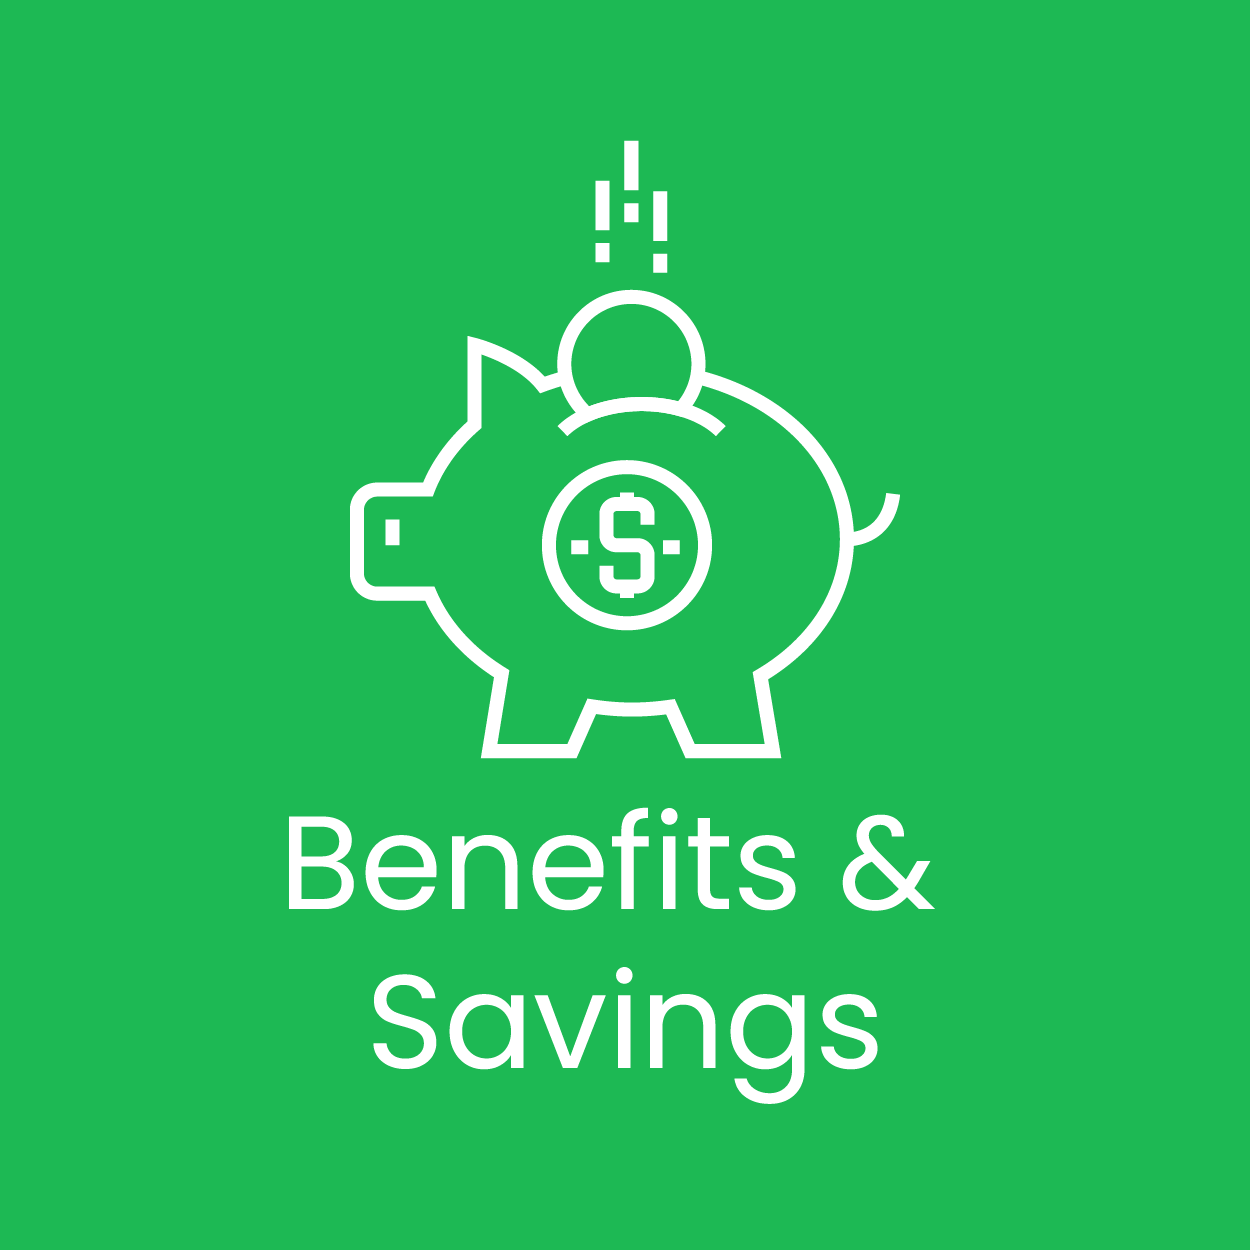 Benefits & Savings